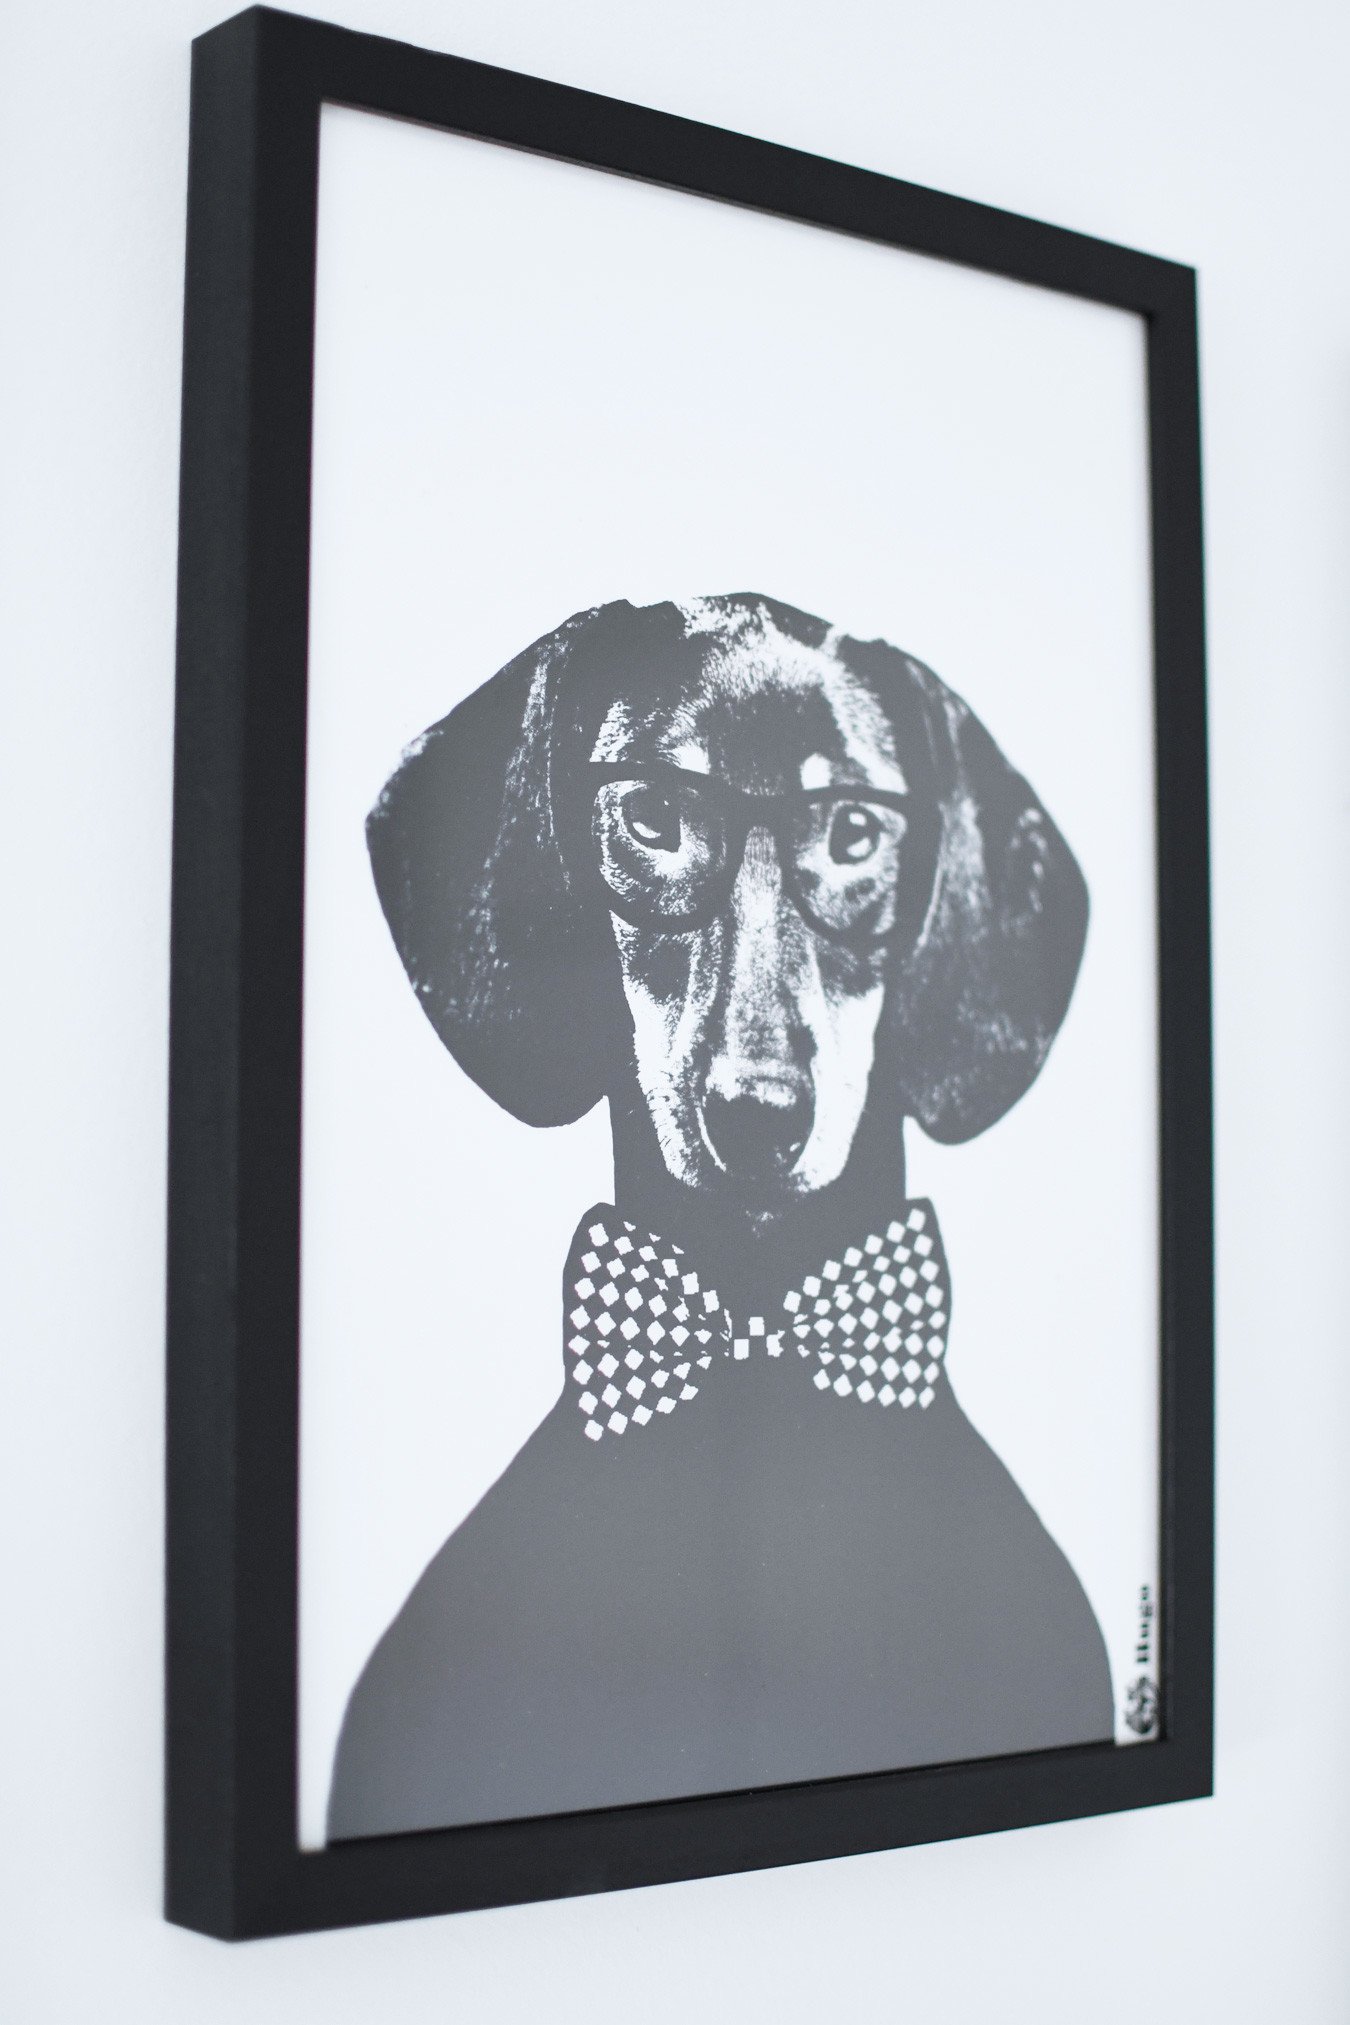 Hugo the dog: print for baby boy's nursery